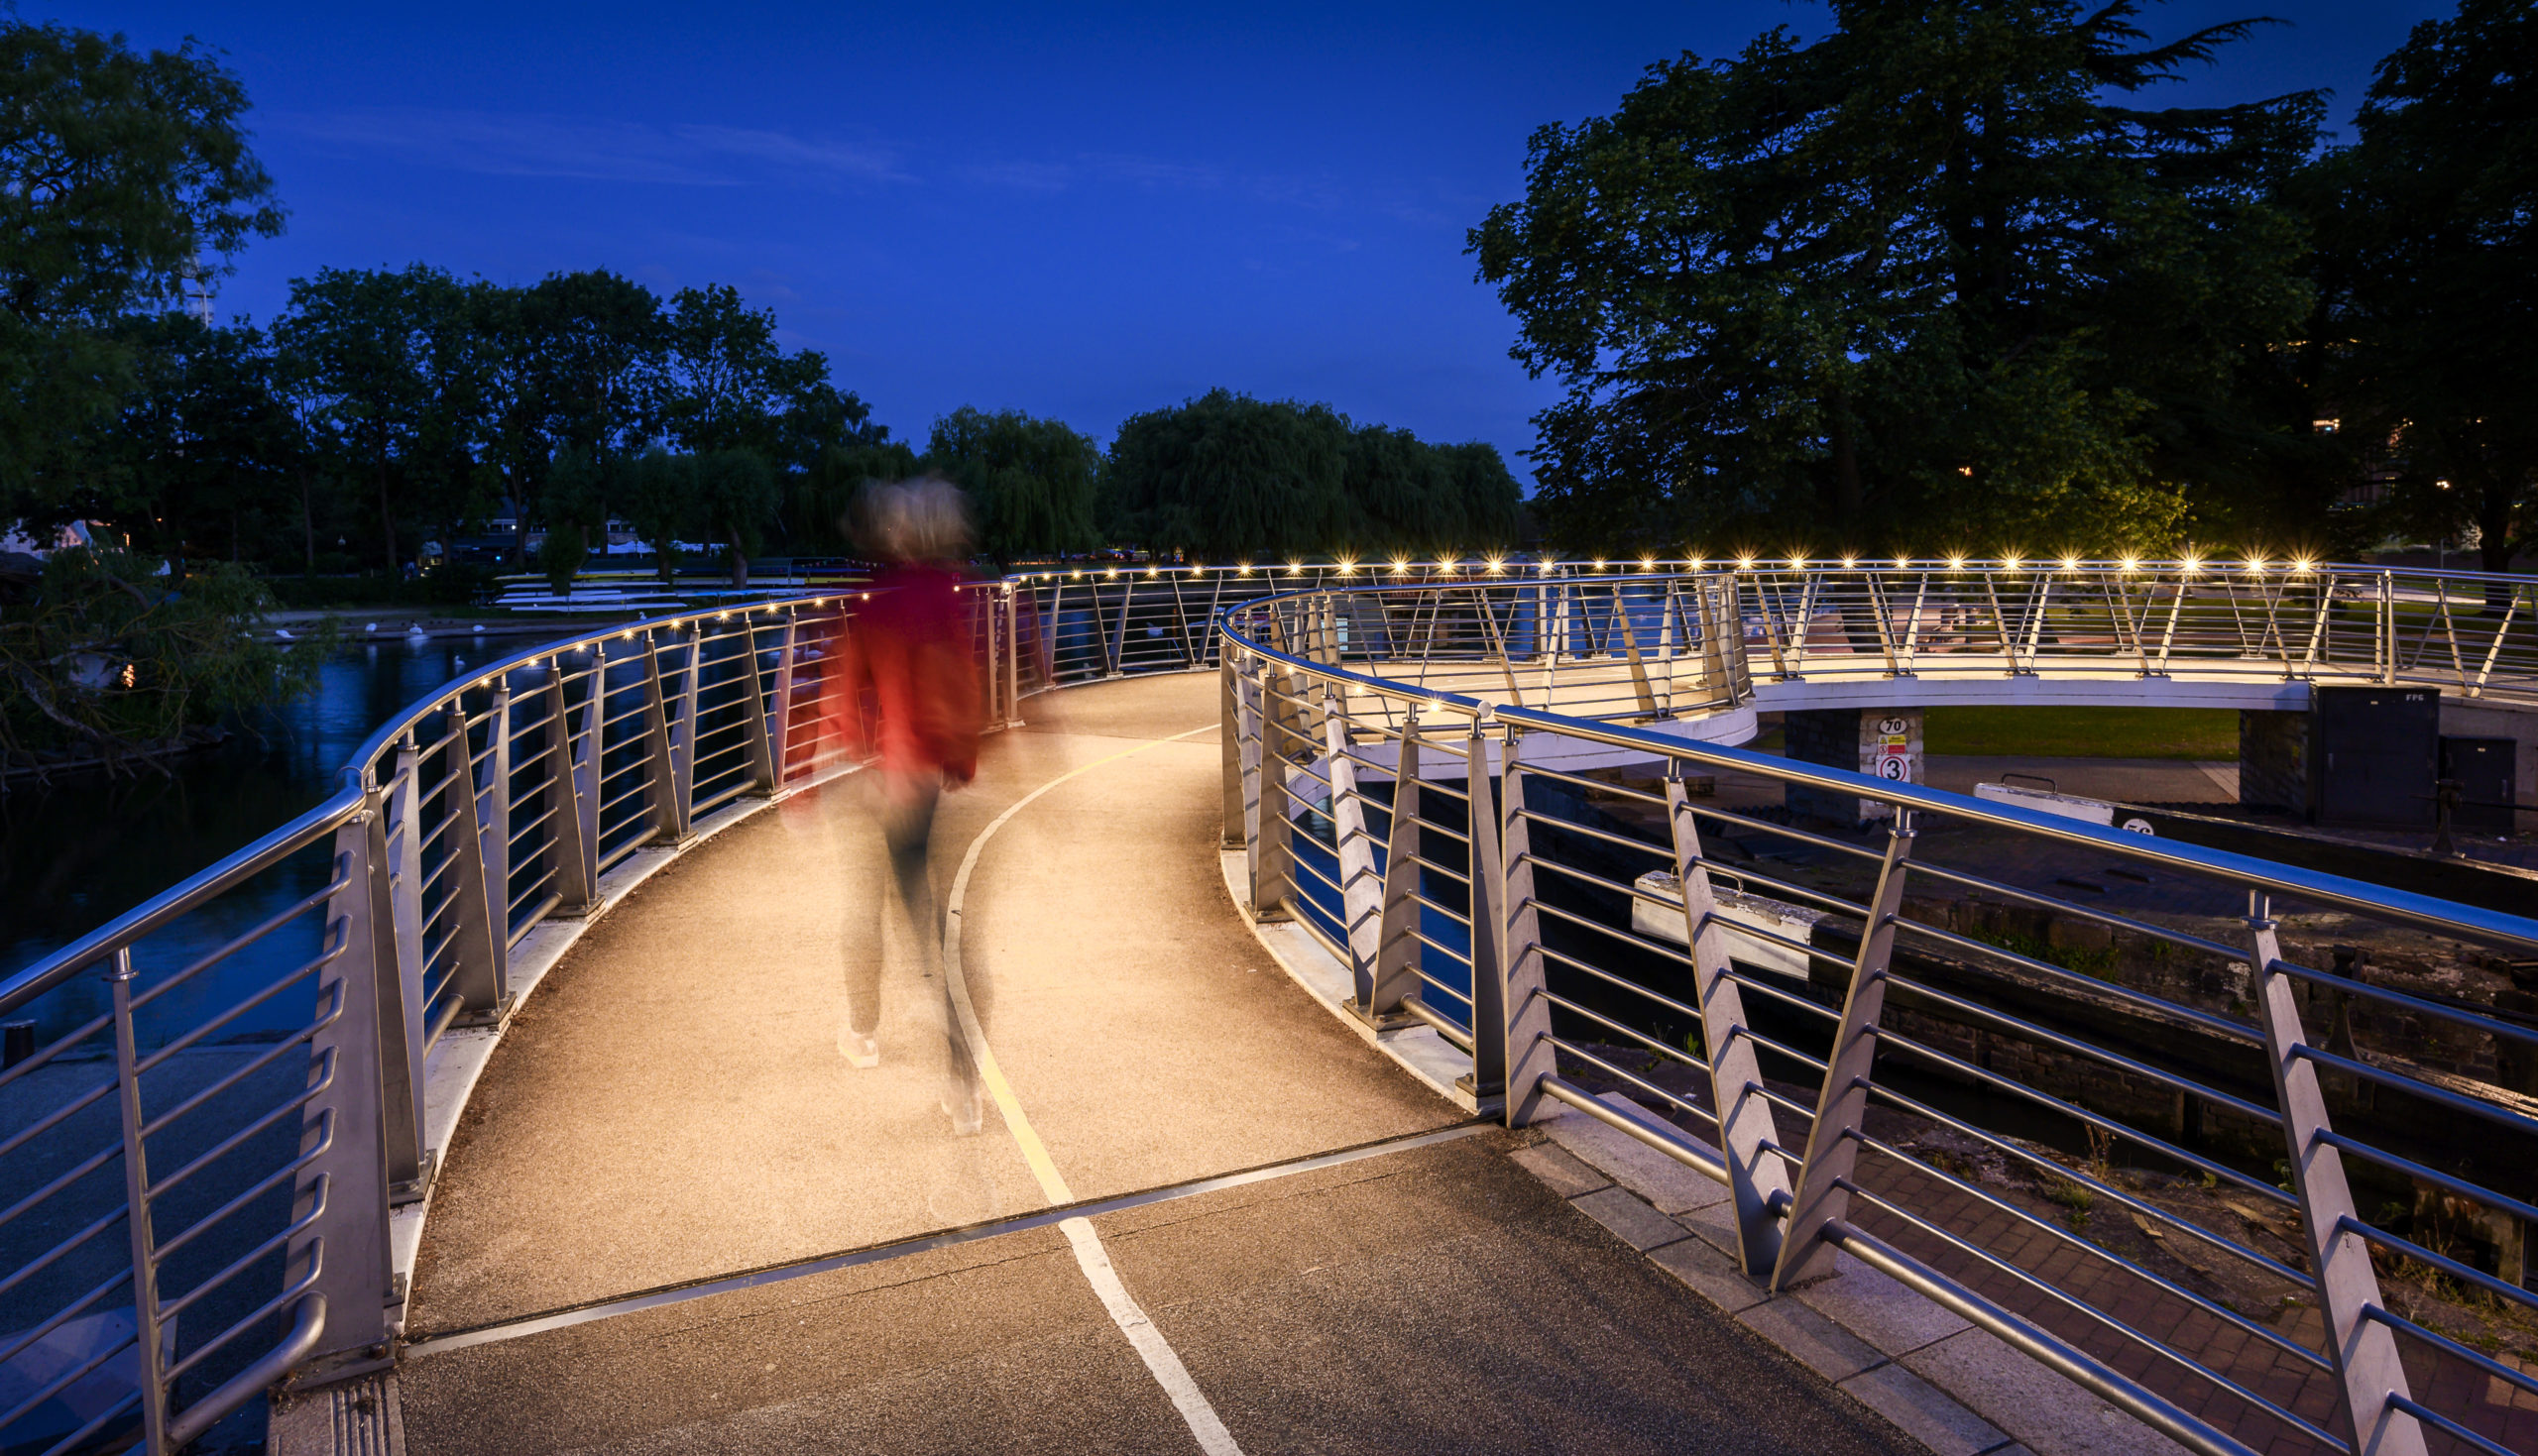 handrail bridge lighting